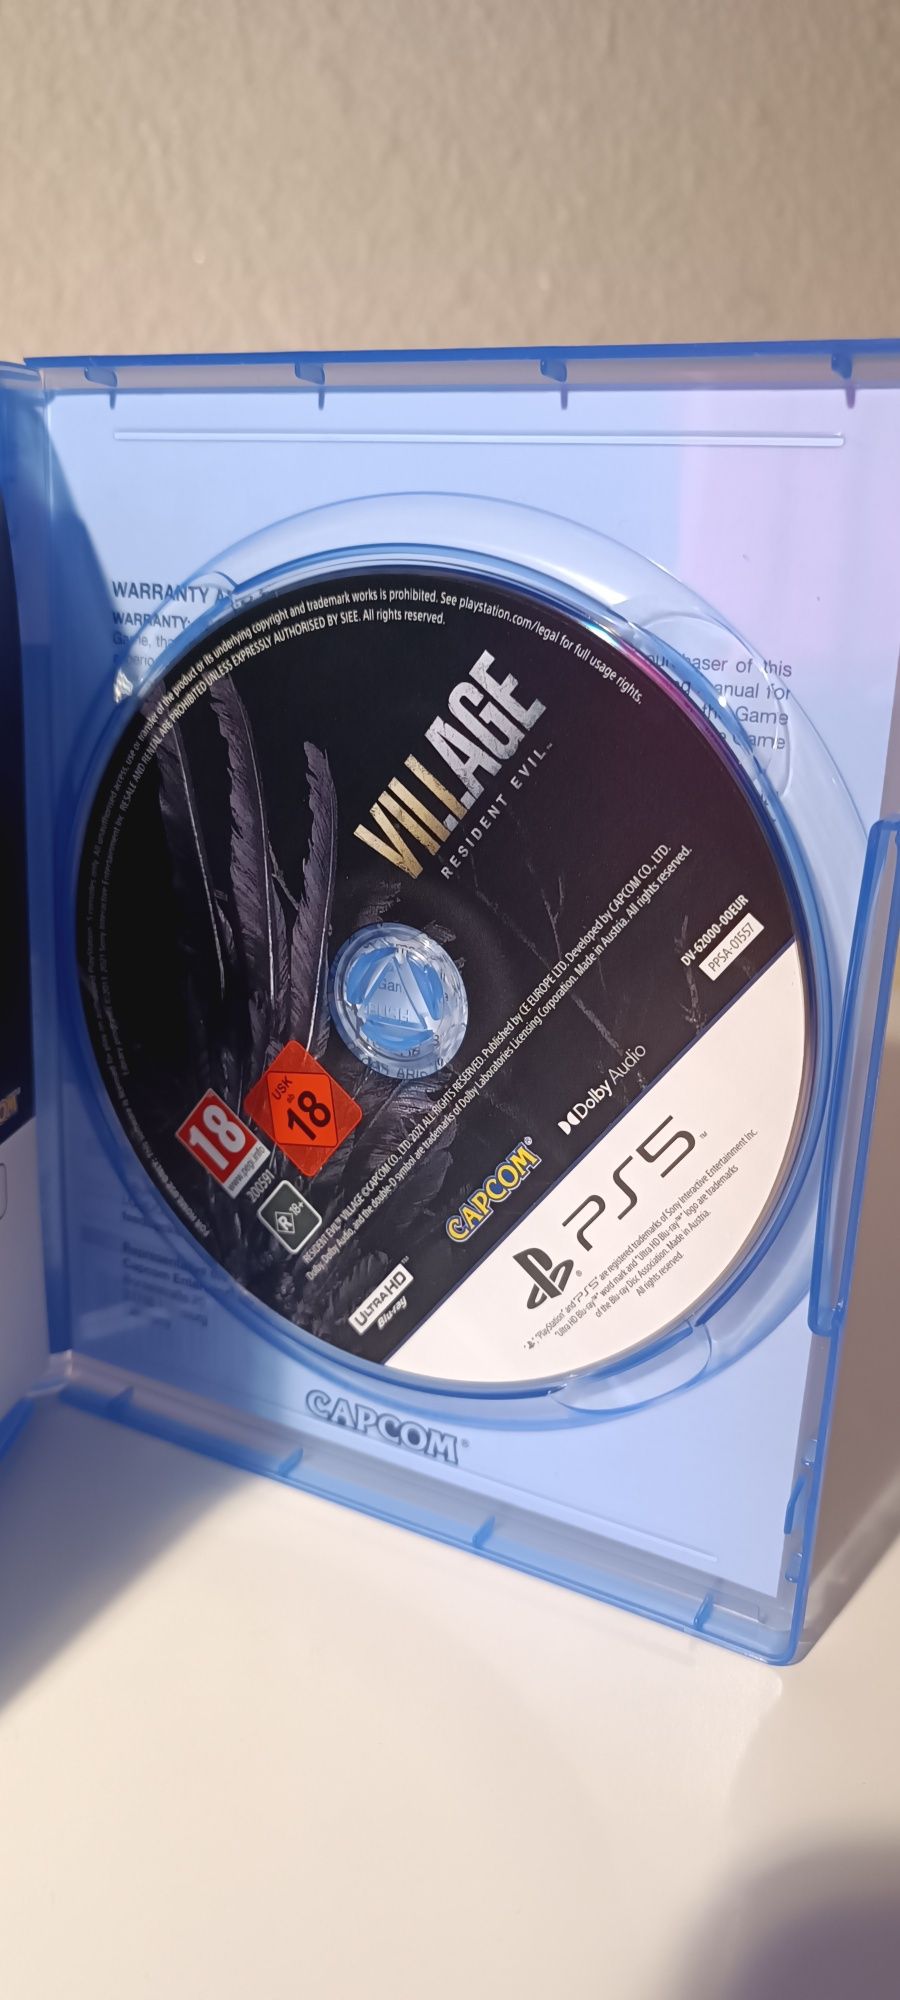 Disk Resident Evil Village Gold Edition for PS5